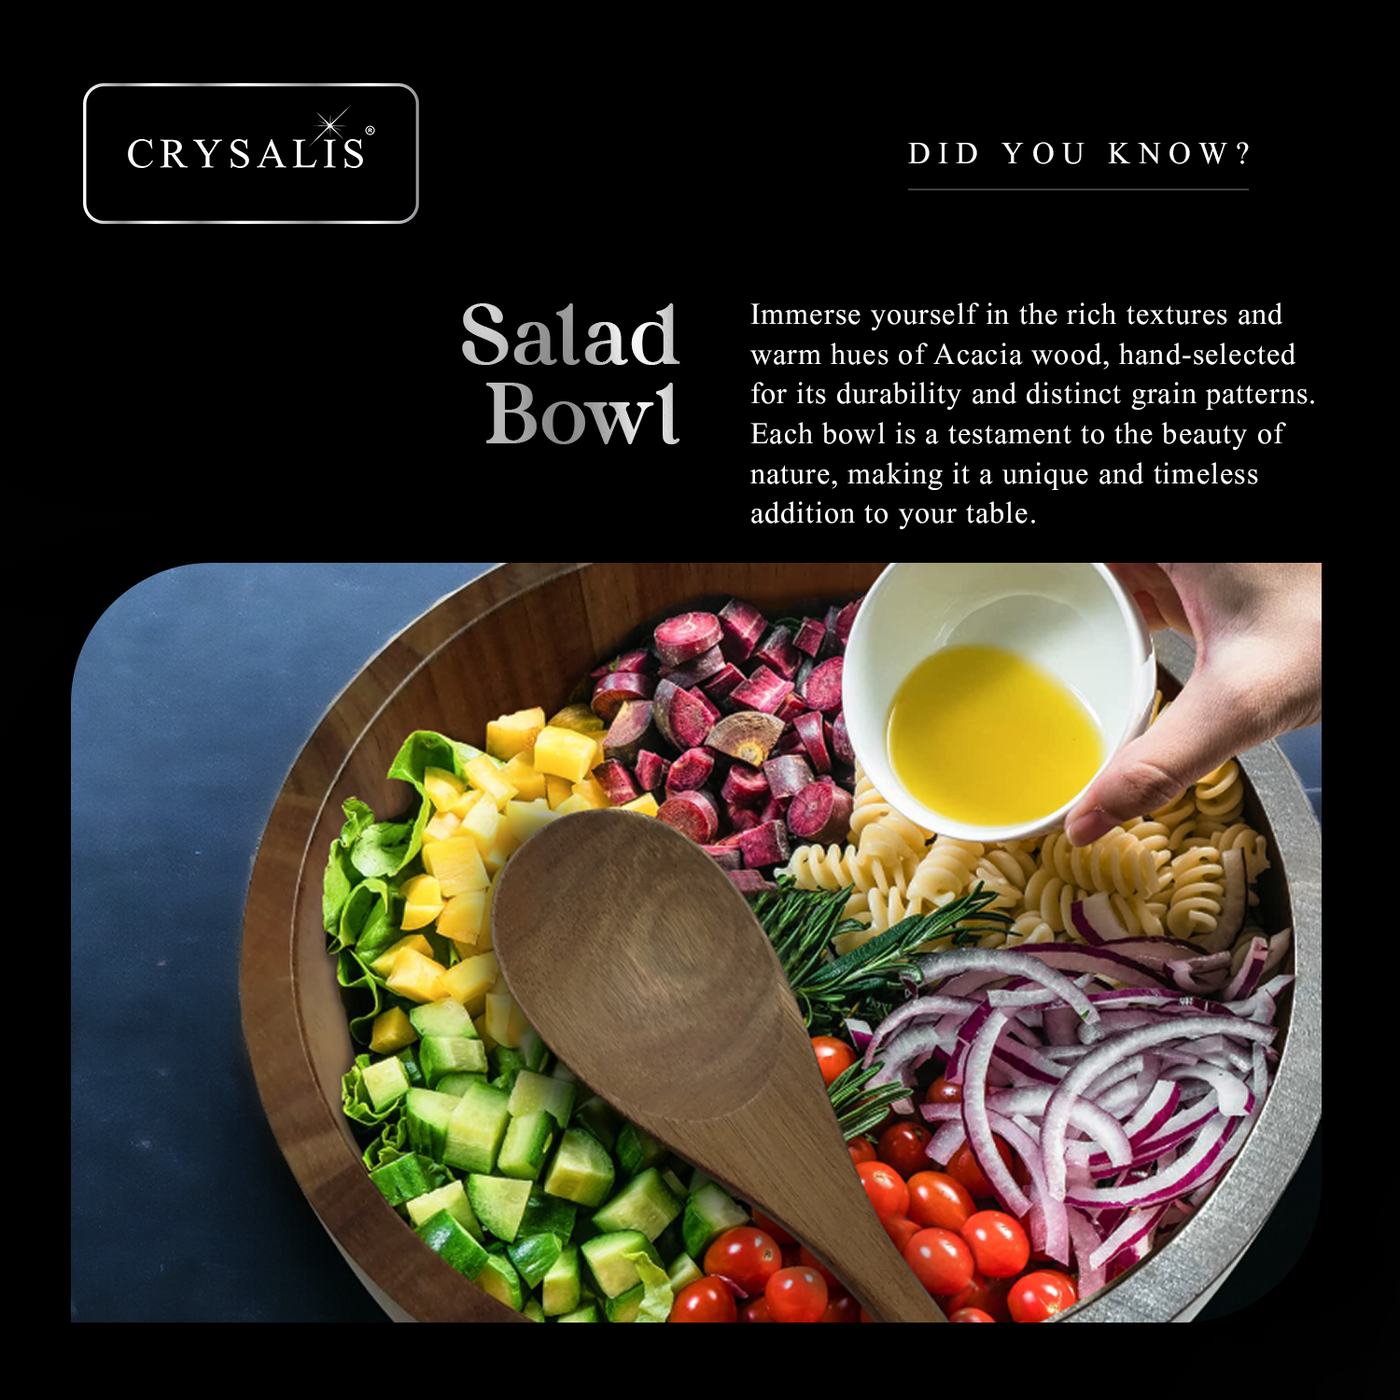 CRYSALIS PREMIUM Salad Bowl Rice Dessert Bowl Acacia Wood